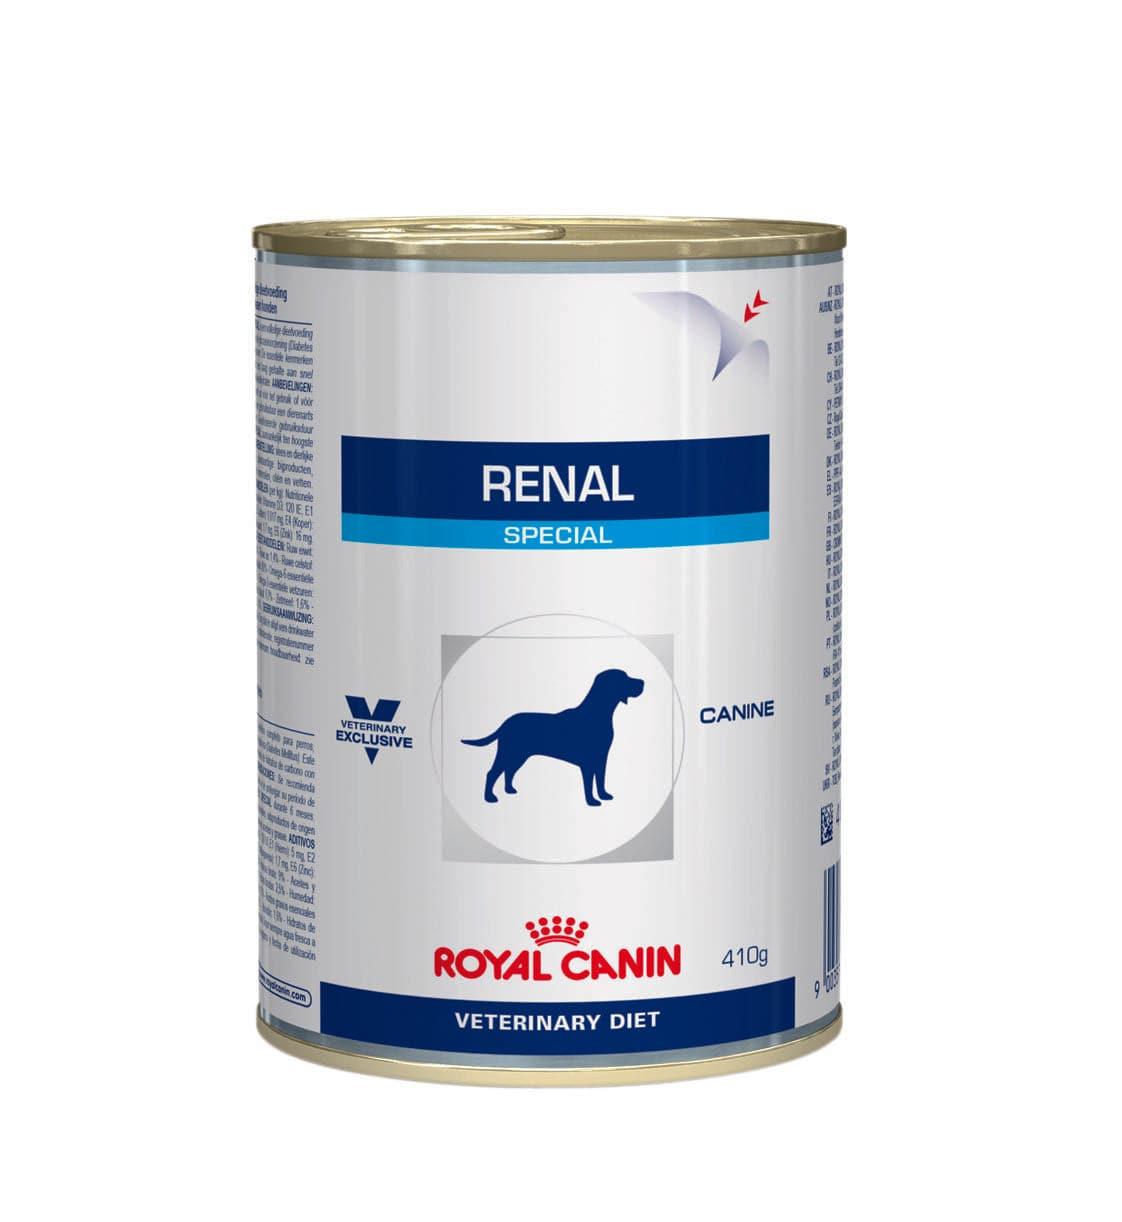 Renal Special Dog Dosen - Royal Canin Veterinary Diet - Alter:Adult, Alter:Senior, Erkrankung:Niere, Futterart:Nass, Geschmack:Huhn, Tierart:Hund - Marigin AG Onlineshop für Tierbedarf